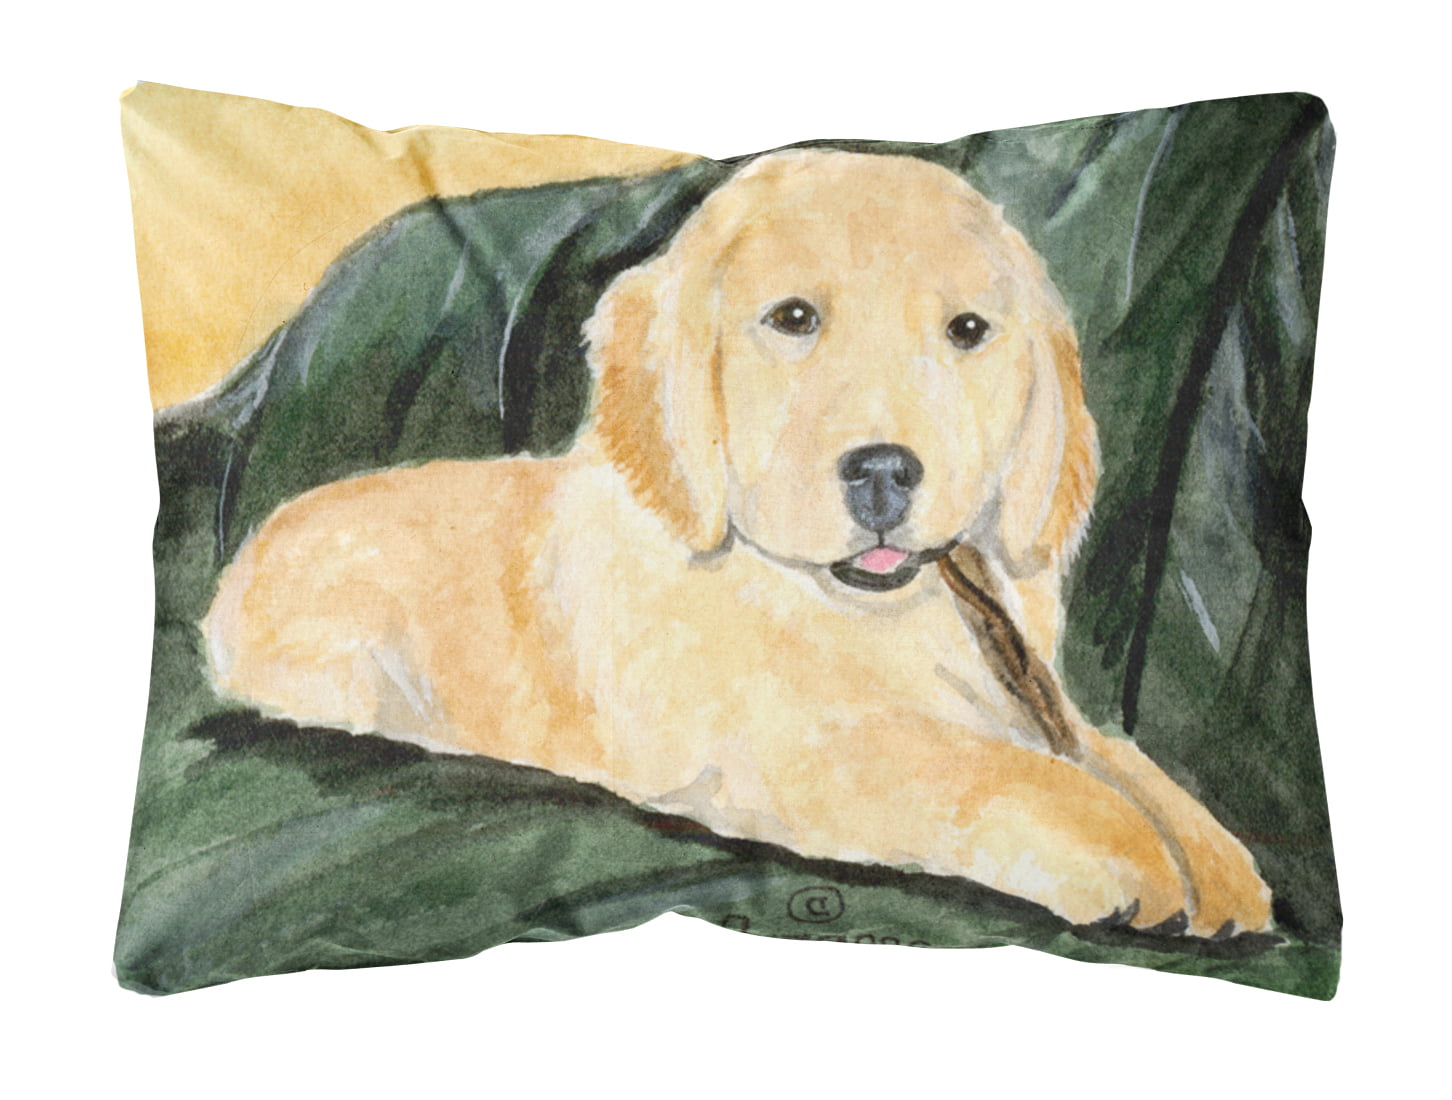 18"Cushion Cover Golden Retriever Linen Pillows Dog Printed Sofa Home Decoration 